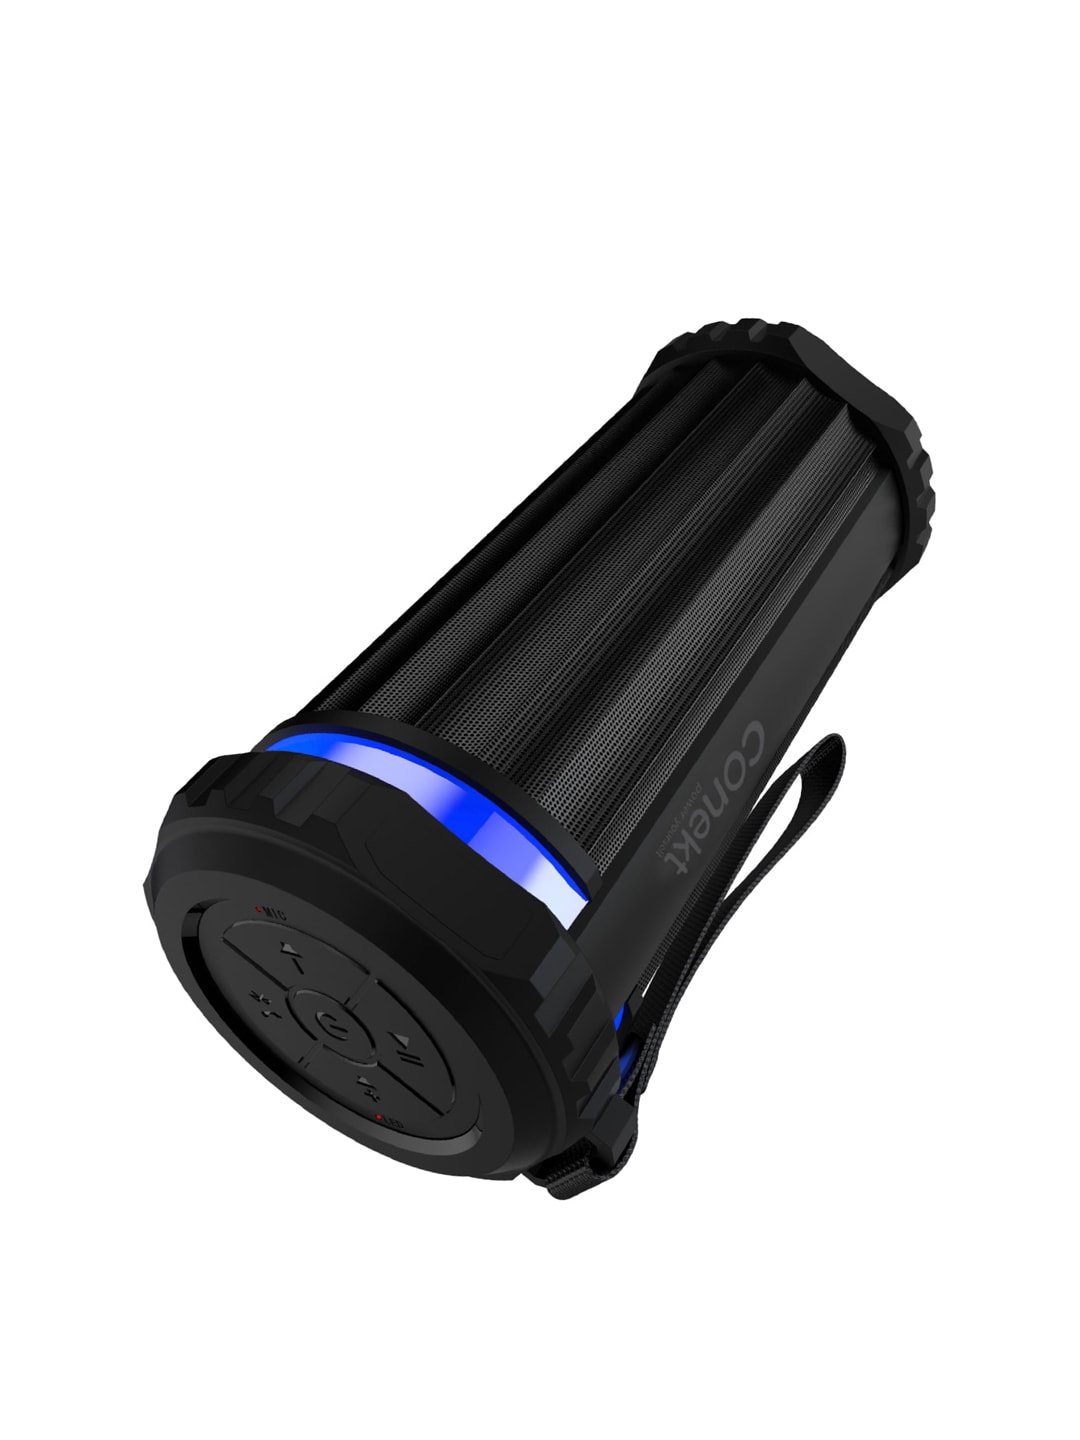 CONEKT Black Solid Hurricane 10W Bluetooth Speaker Price in India